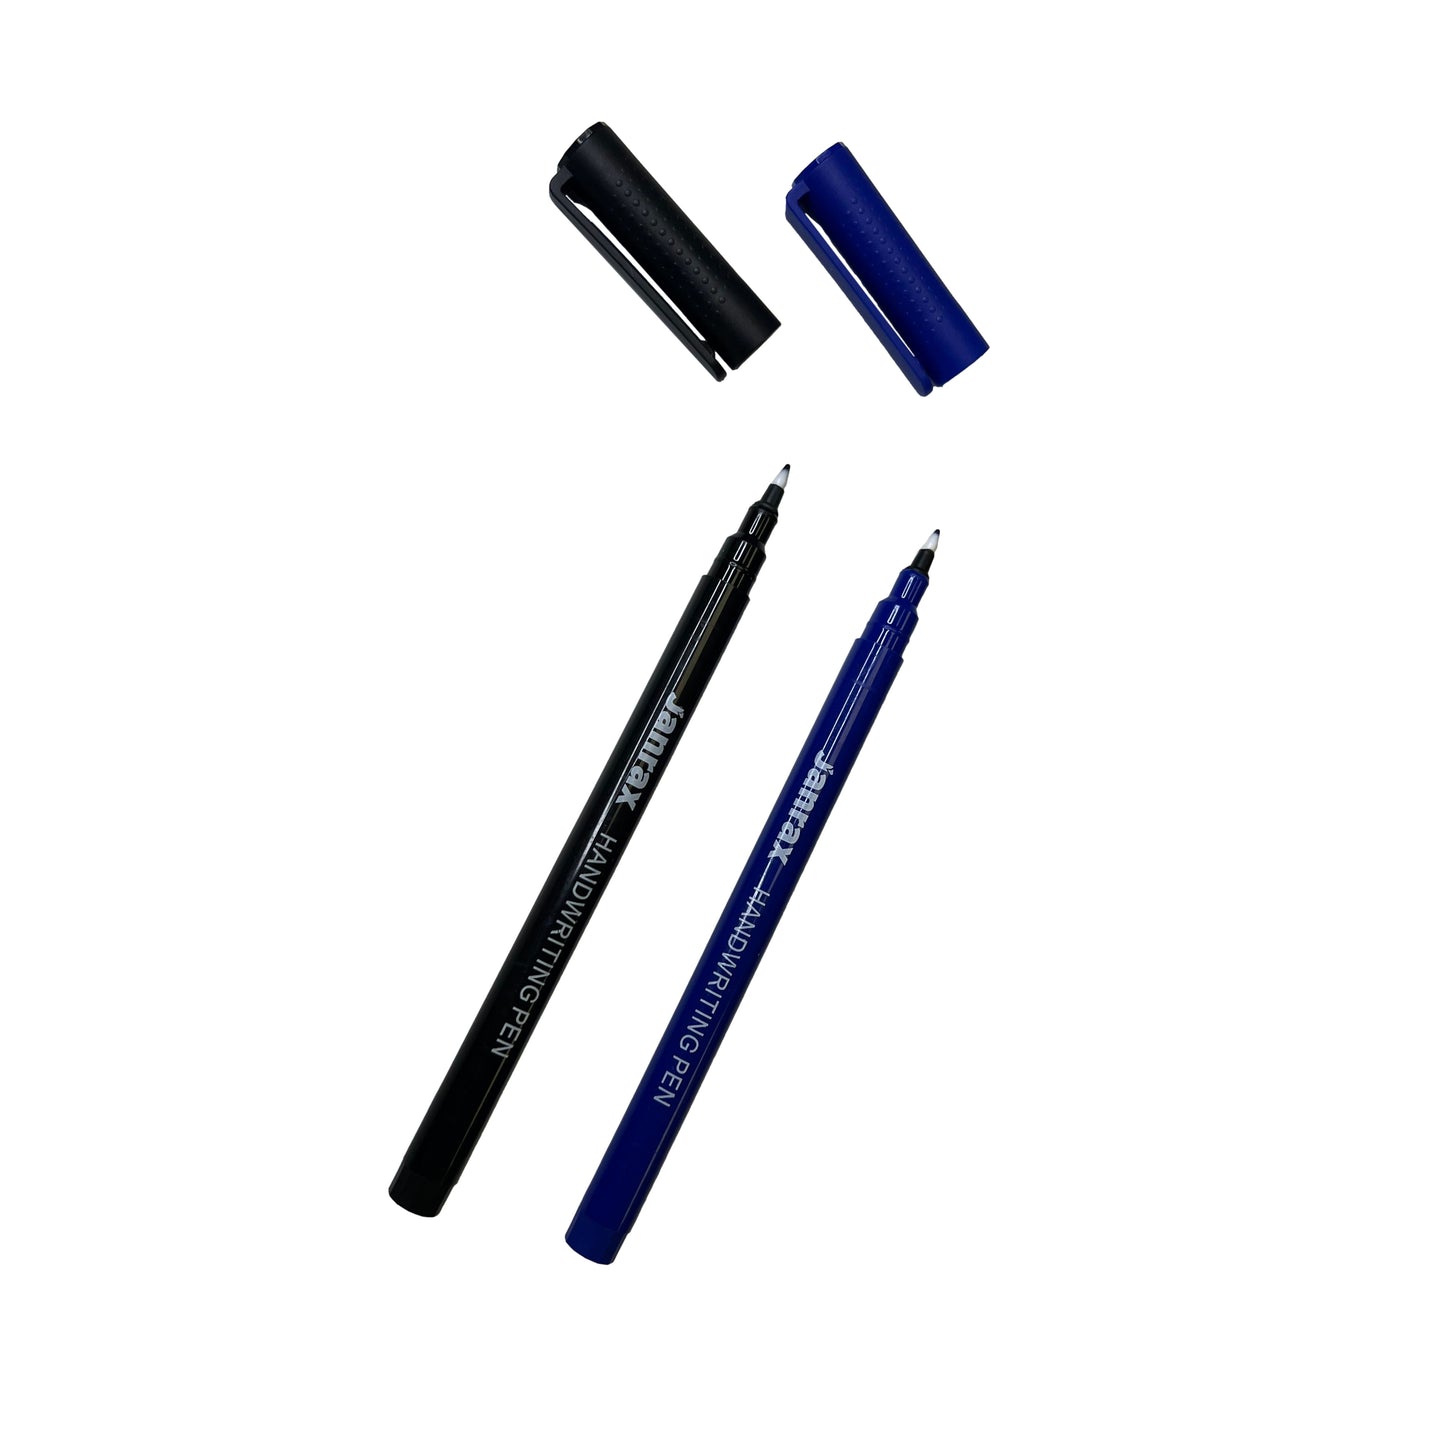 Pack of 12 Black Handwriting Pens by Janrax